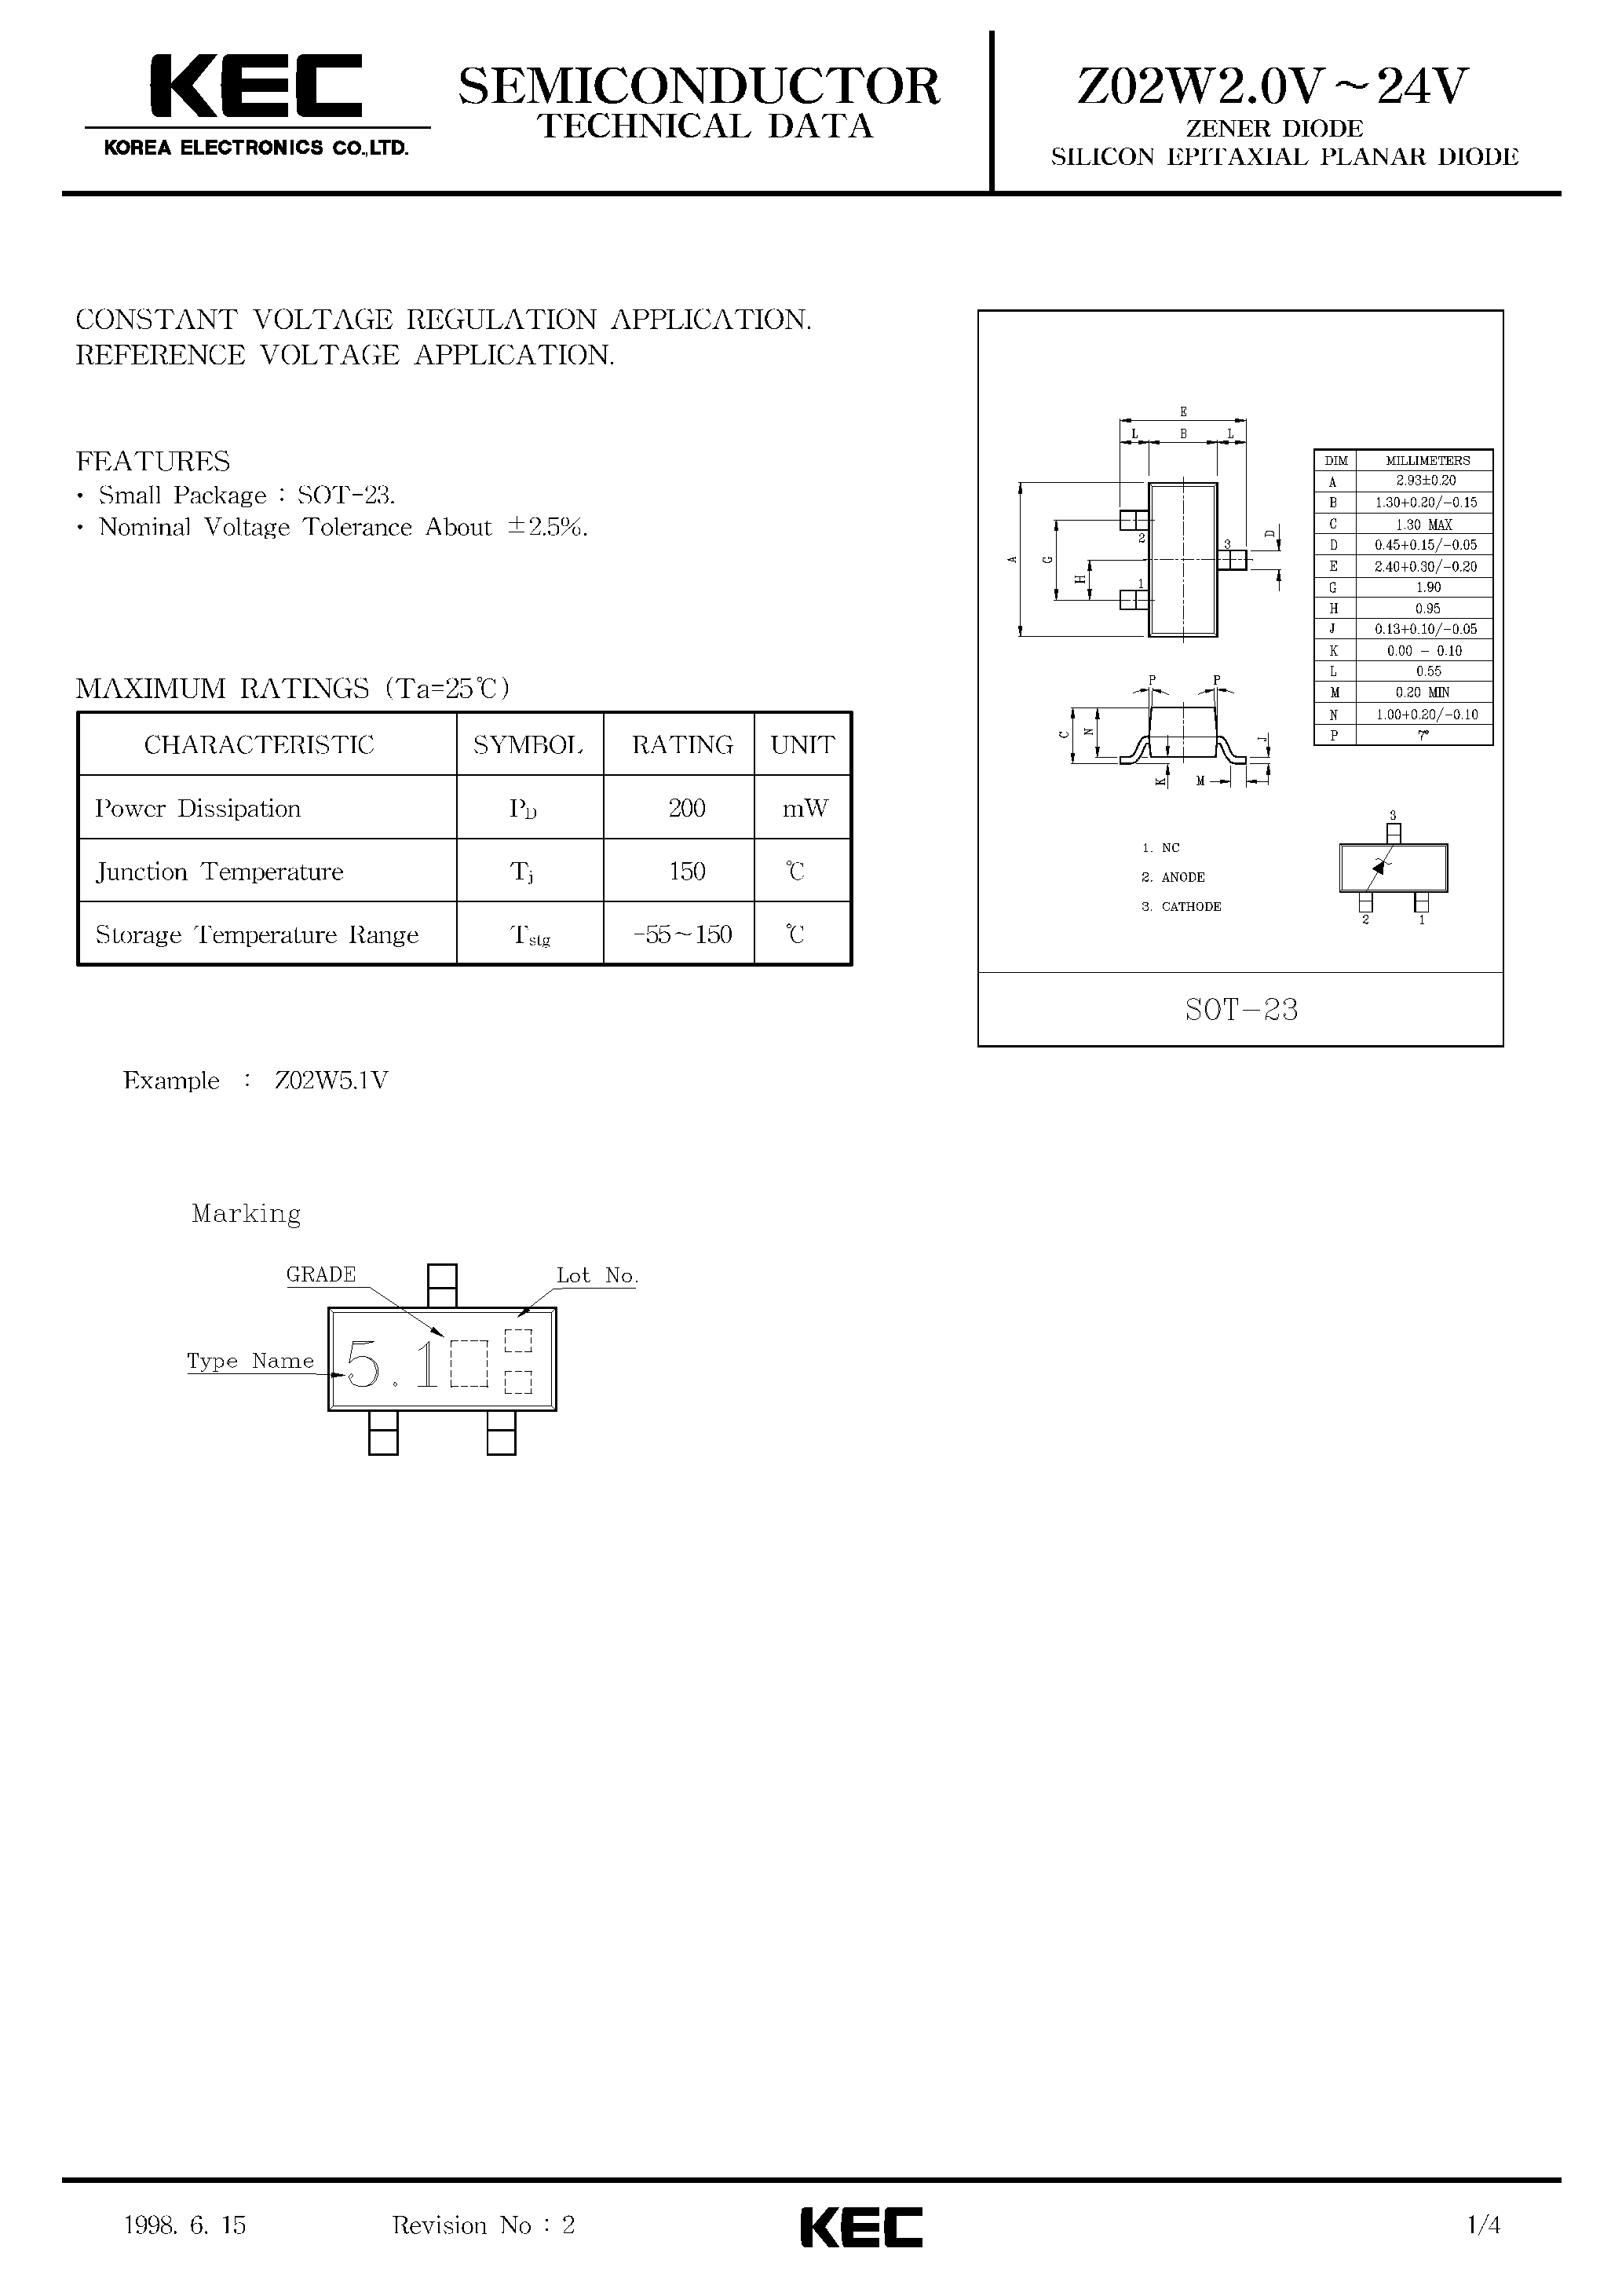 Datasheet Z02W39V - ZENER DIODE SILICON EPITAXIAL PLANAR DIODE (CONSTANT VOLTAGE REGULATION/ REFERENCE VOLTAGE) page 1